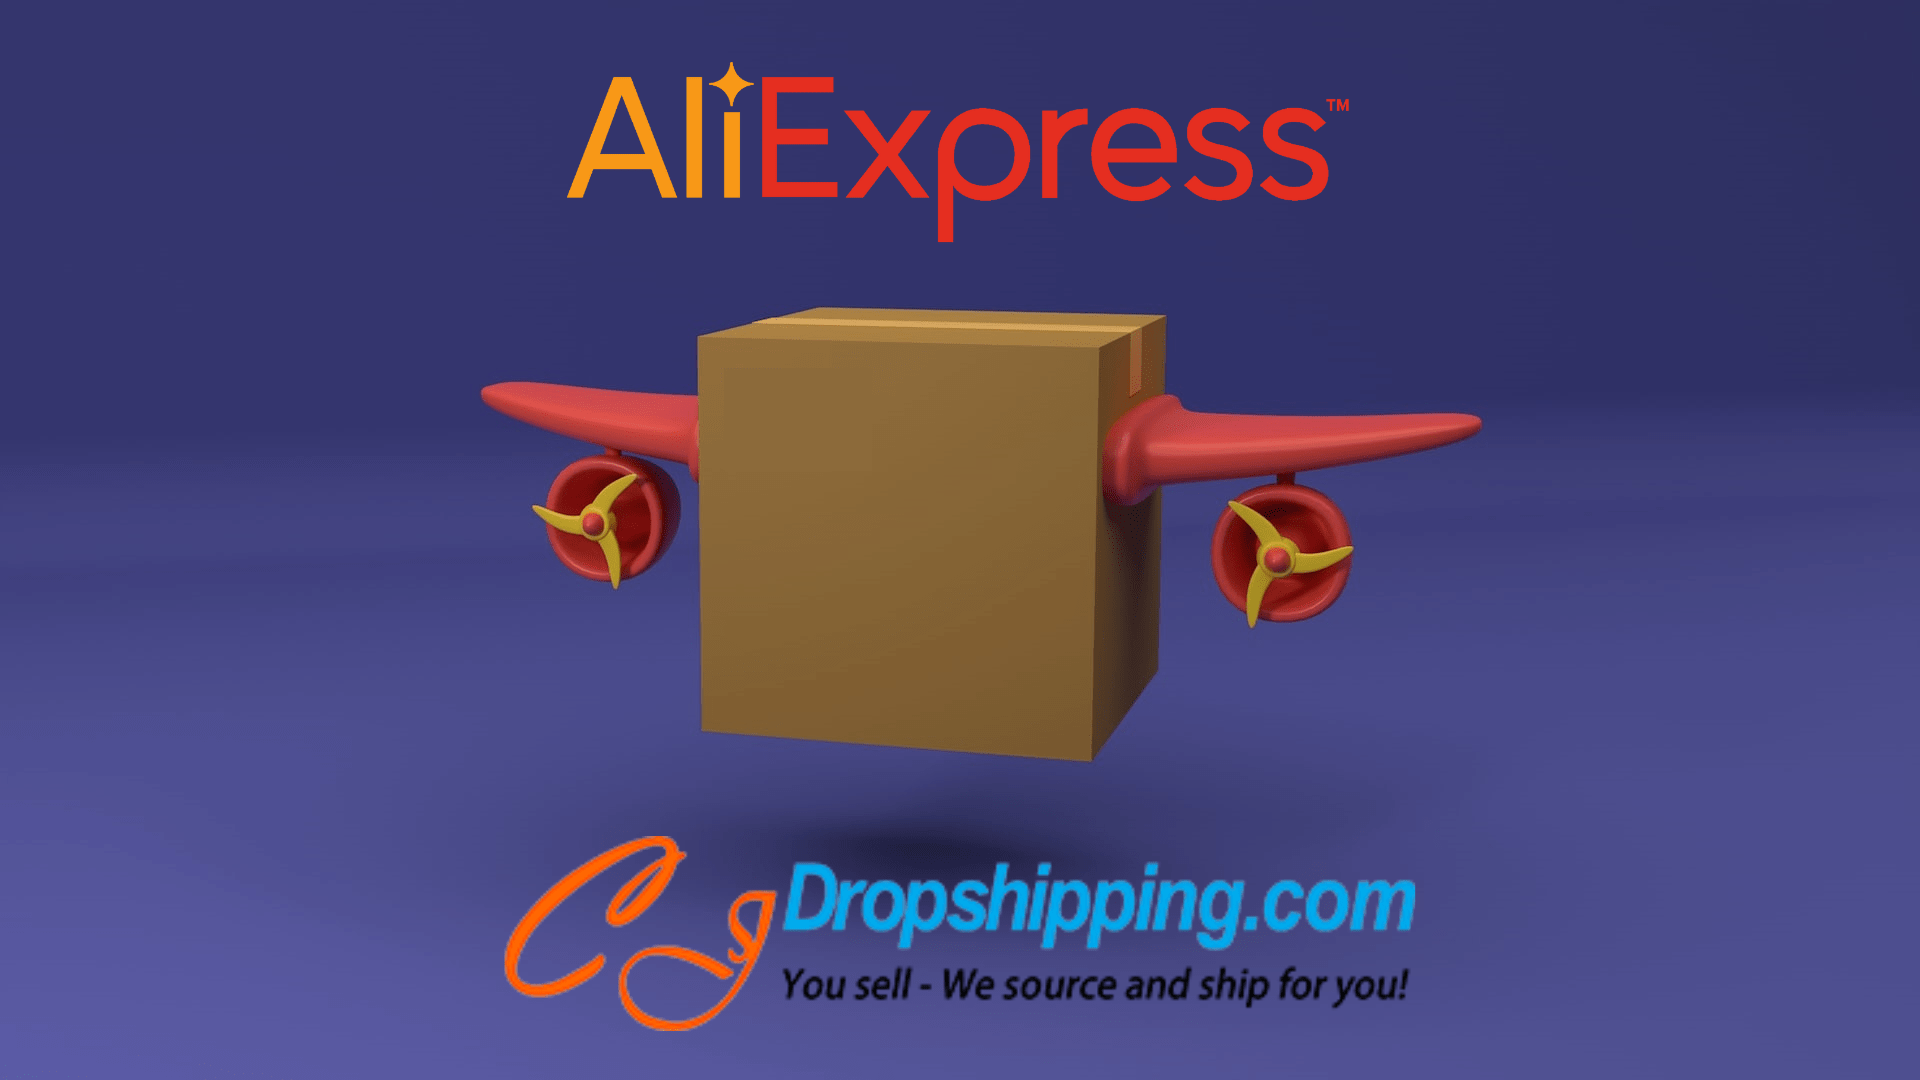 CJDropshipping Vs Aliexpress